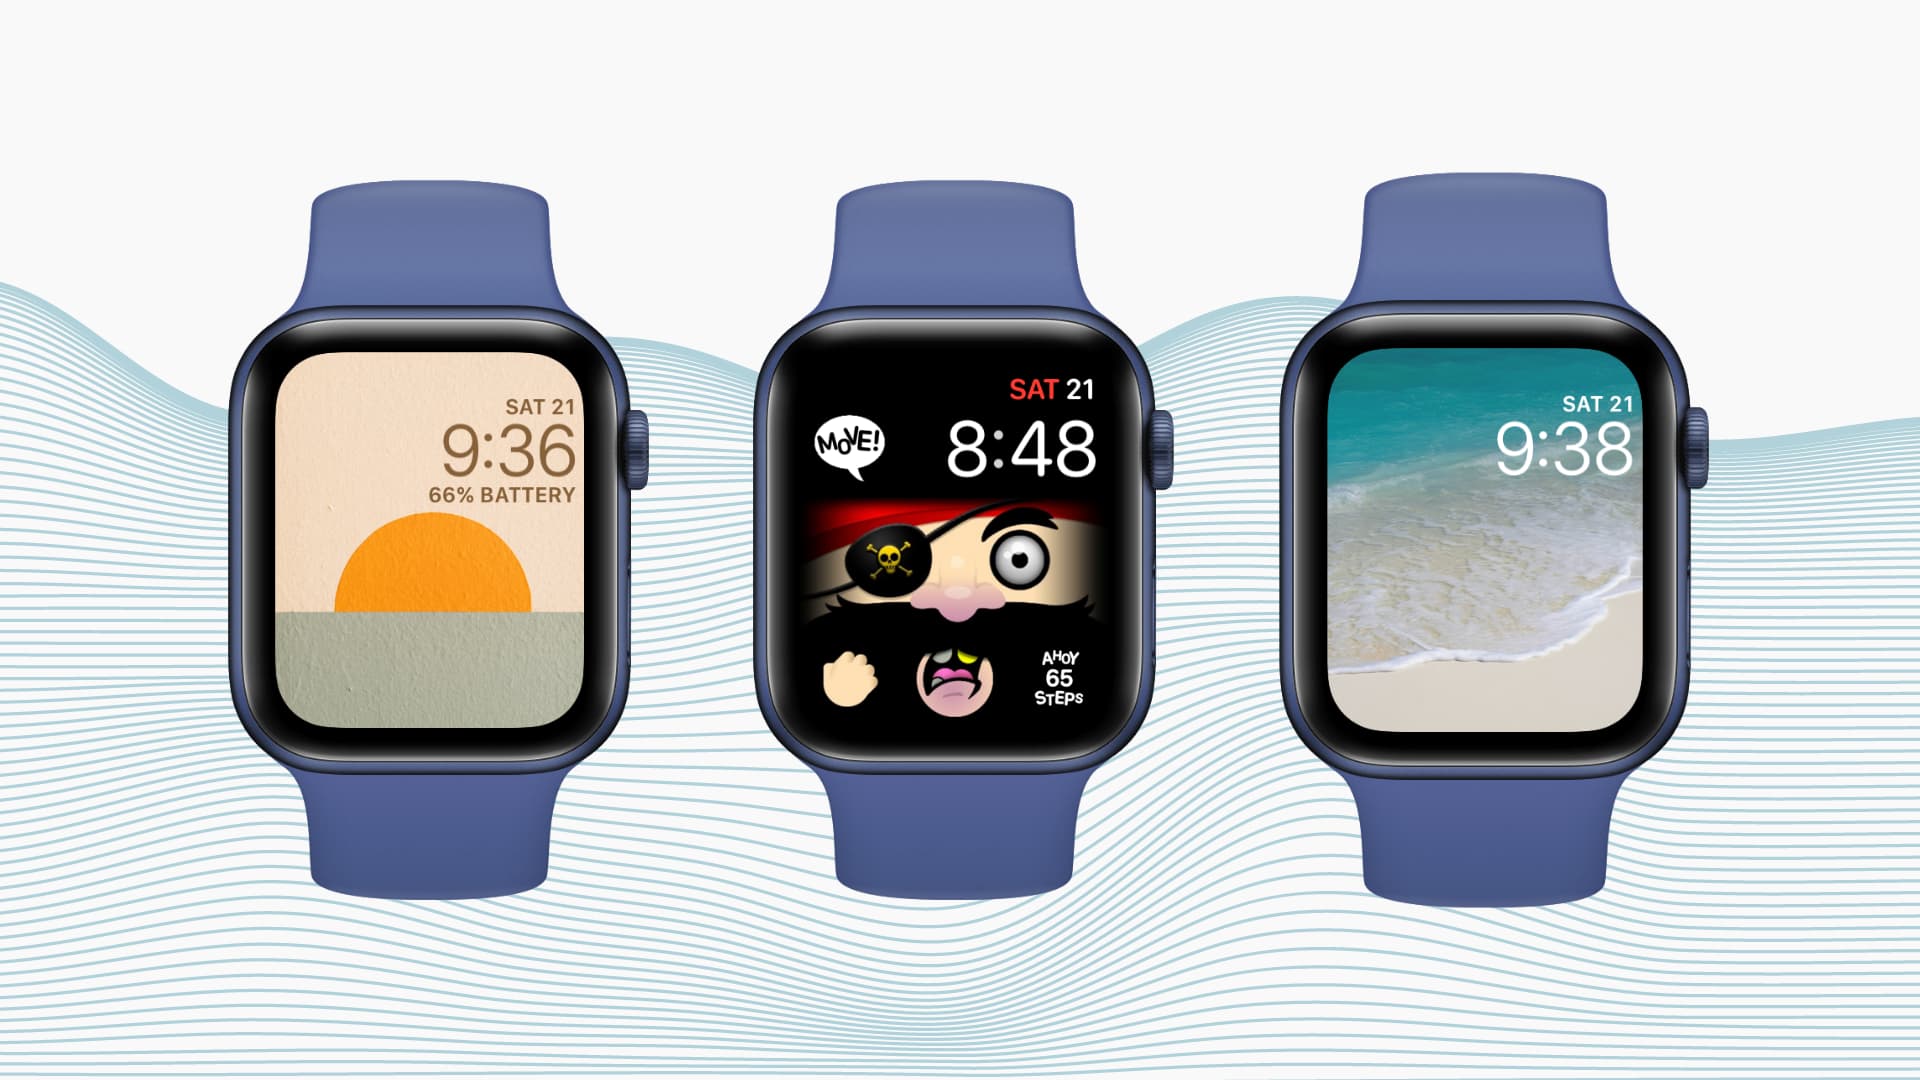 Custom watch faces on Apple Watch